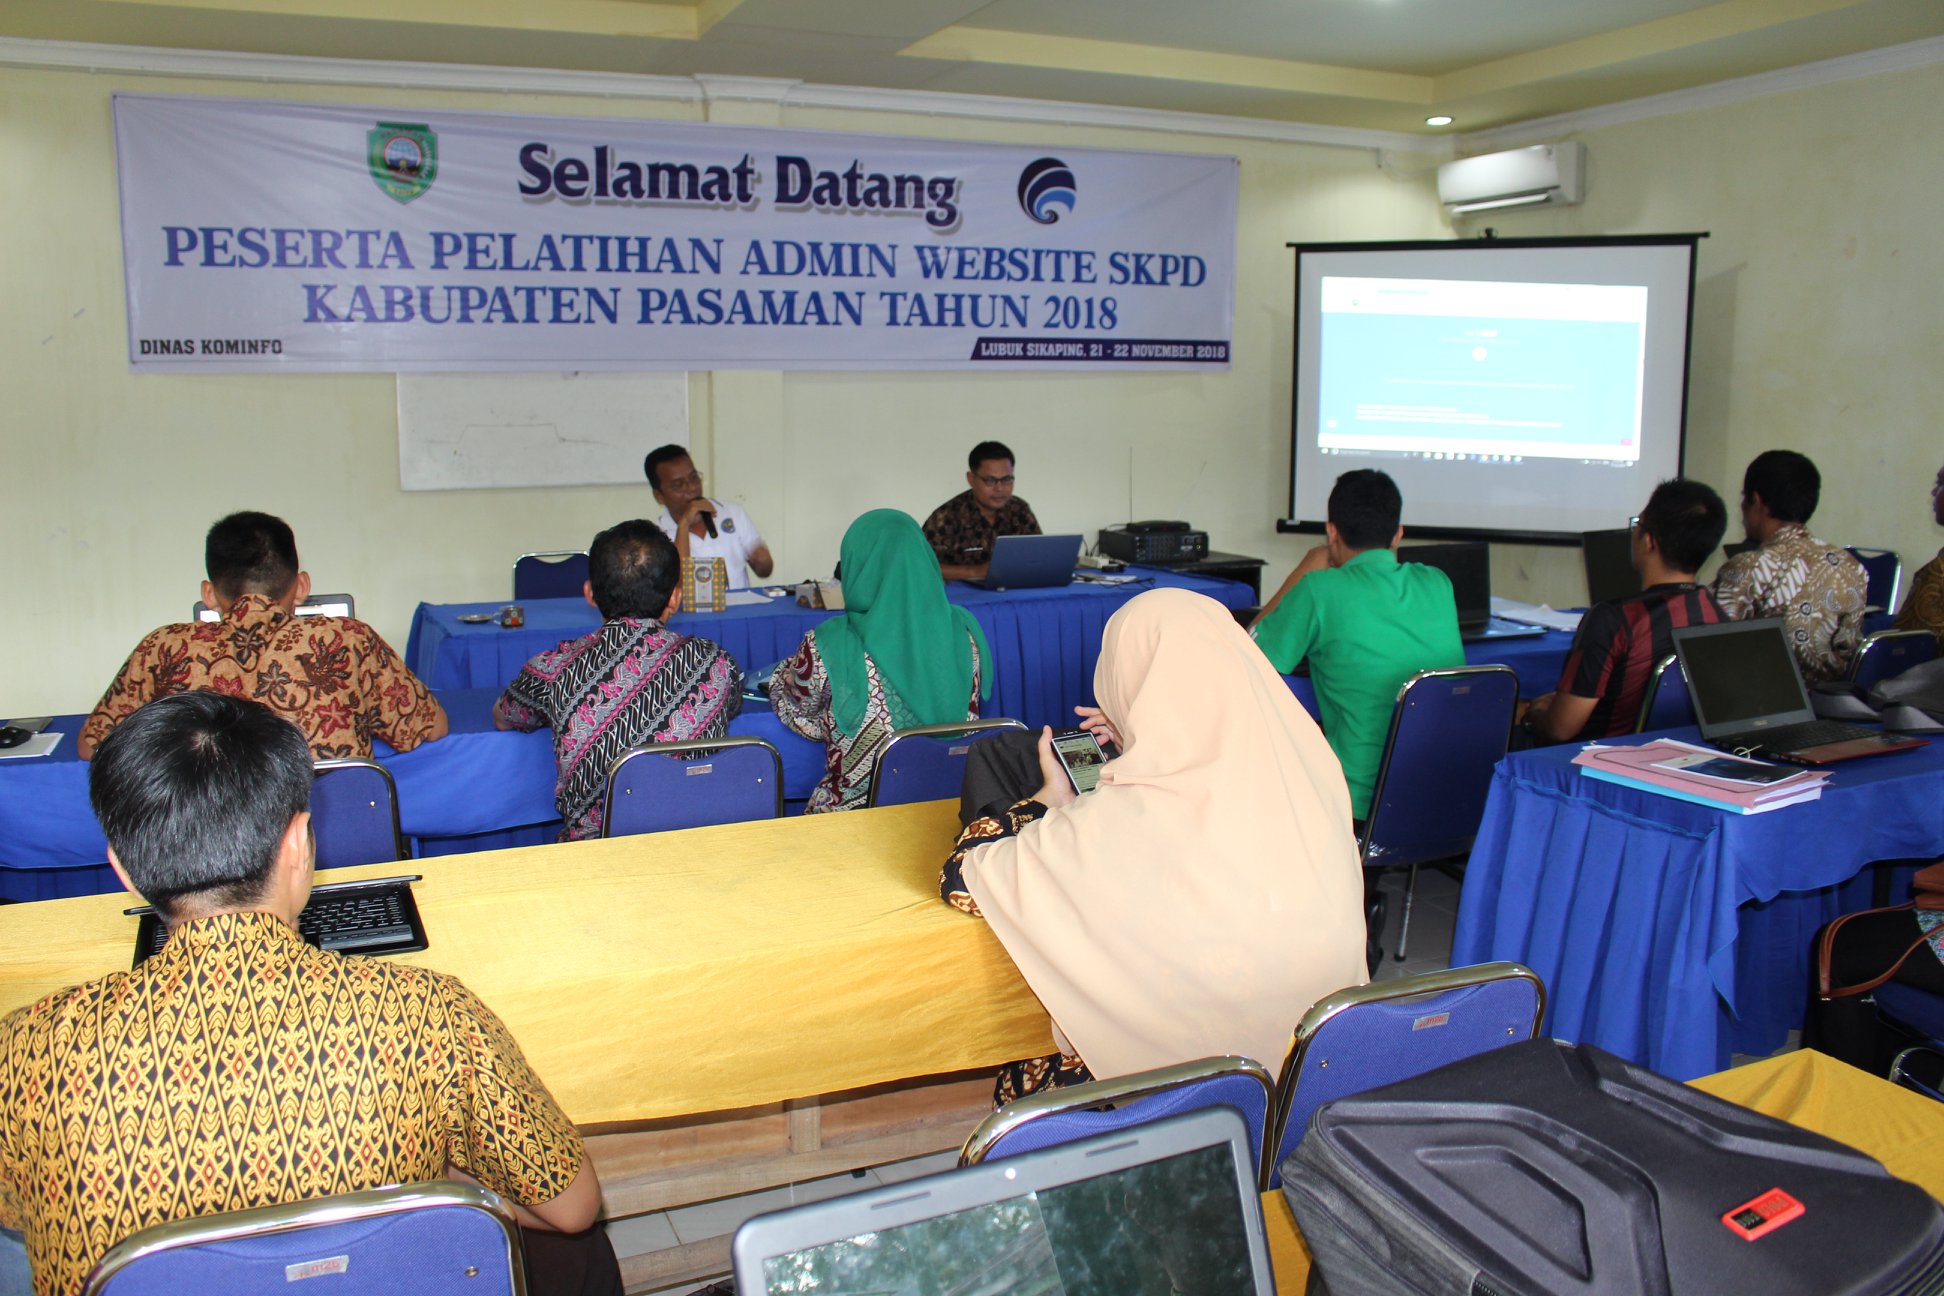 Pelatihan Admin Website SKPD Kabupaten Pasaman